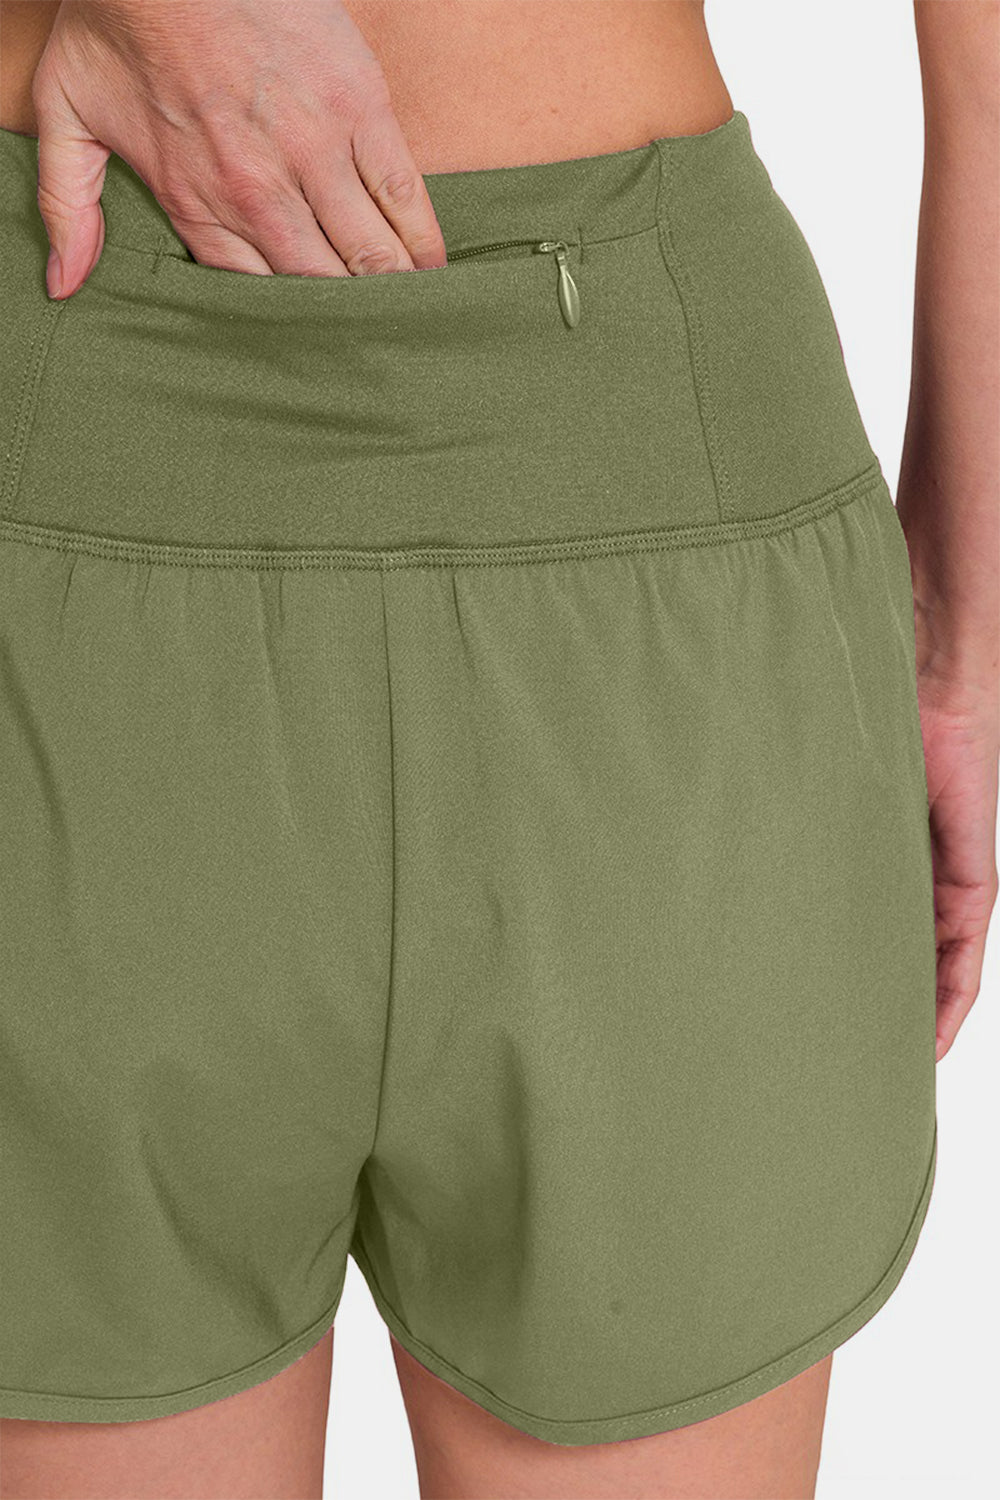 Green High-Waisted Zippered Back Pocket Active Shorts - Tigbul's Variety Fashion Shop